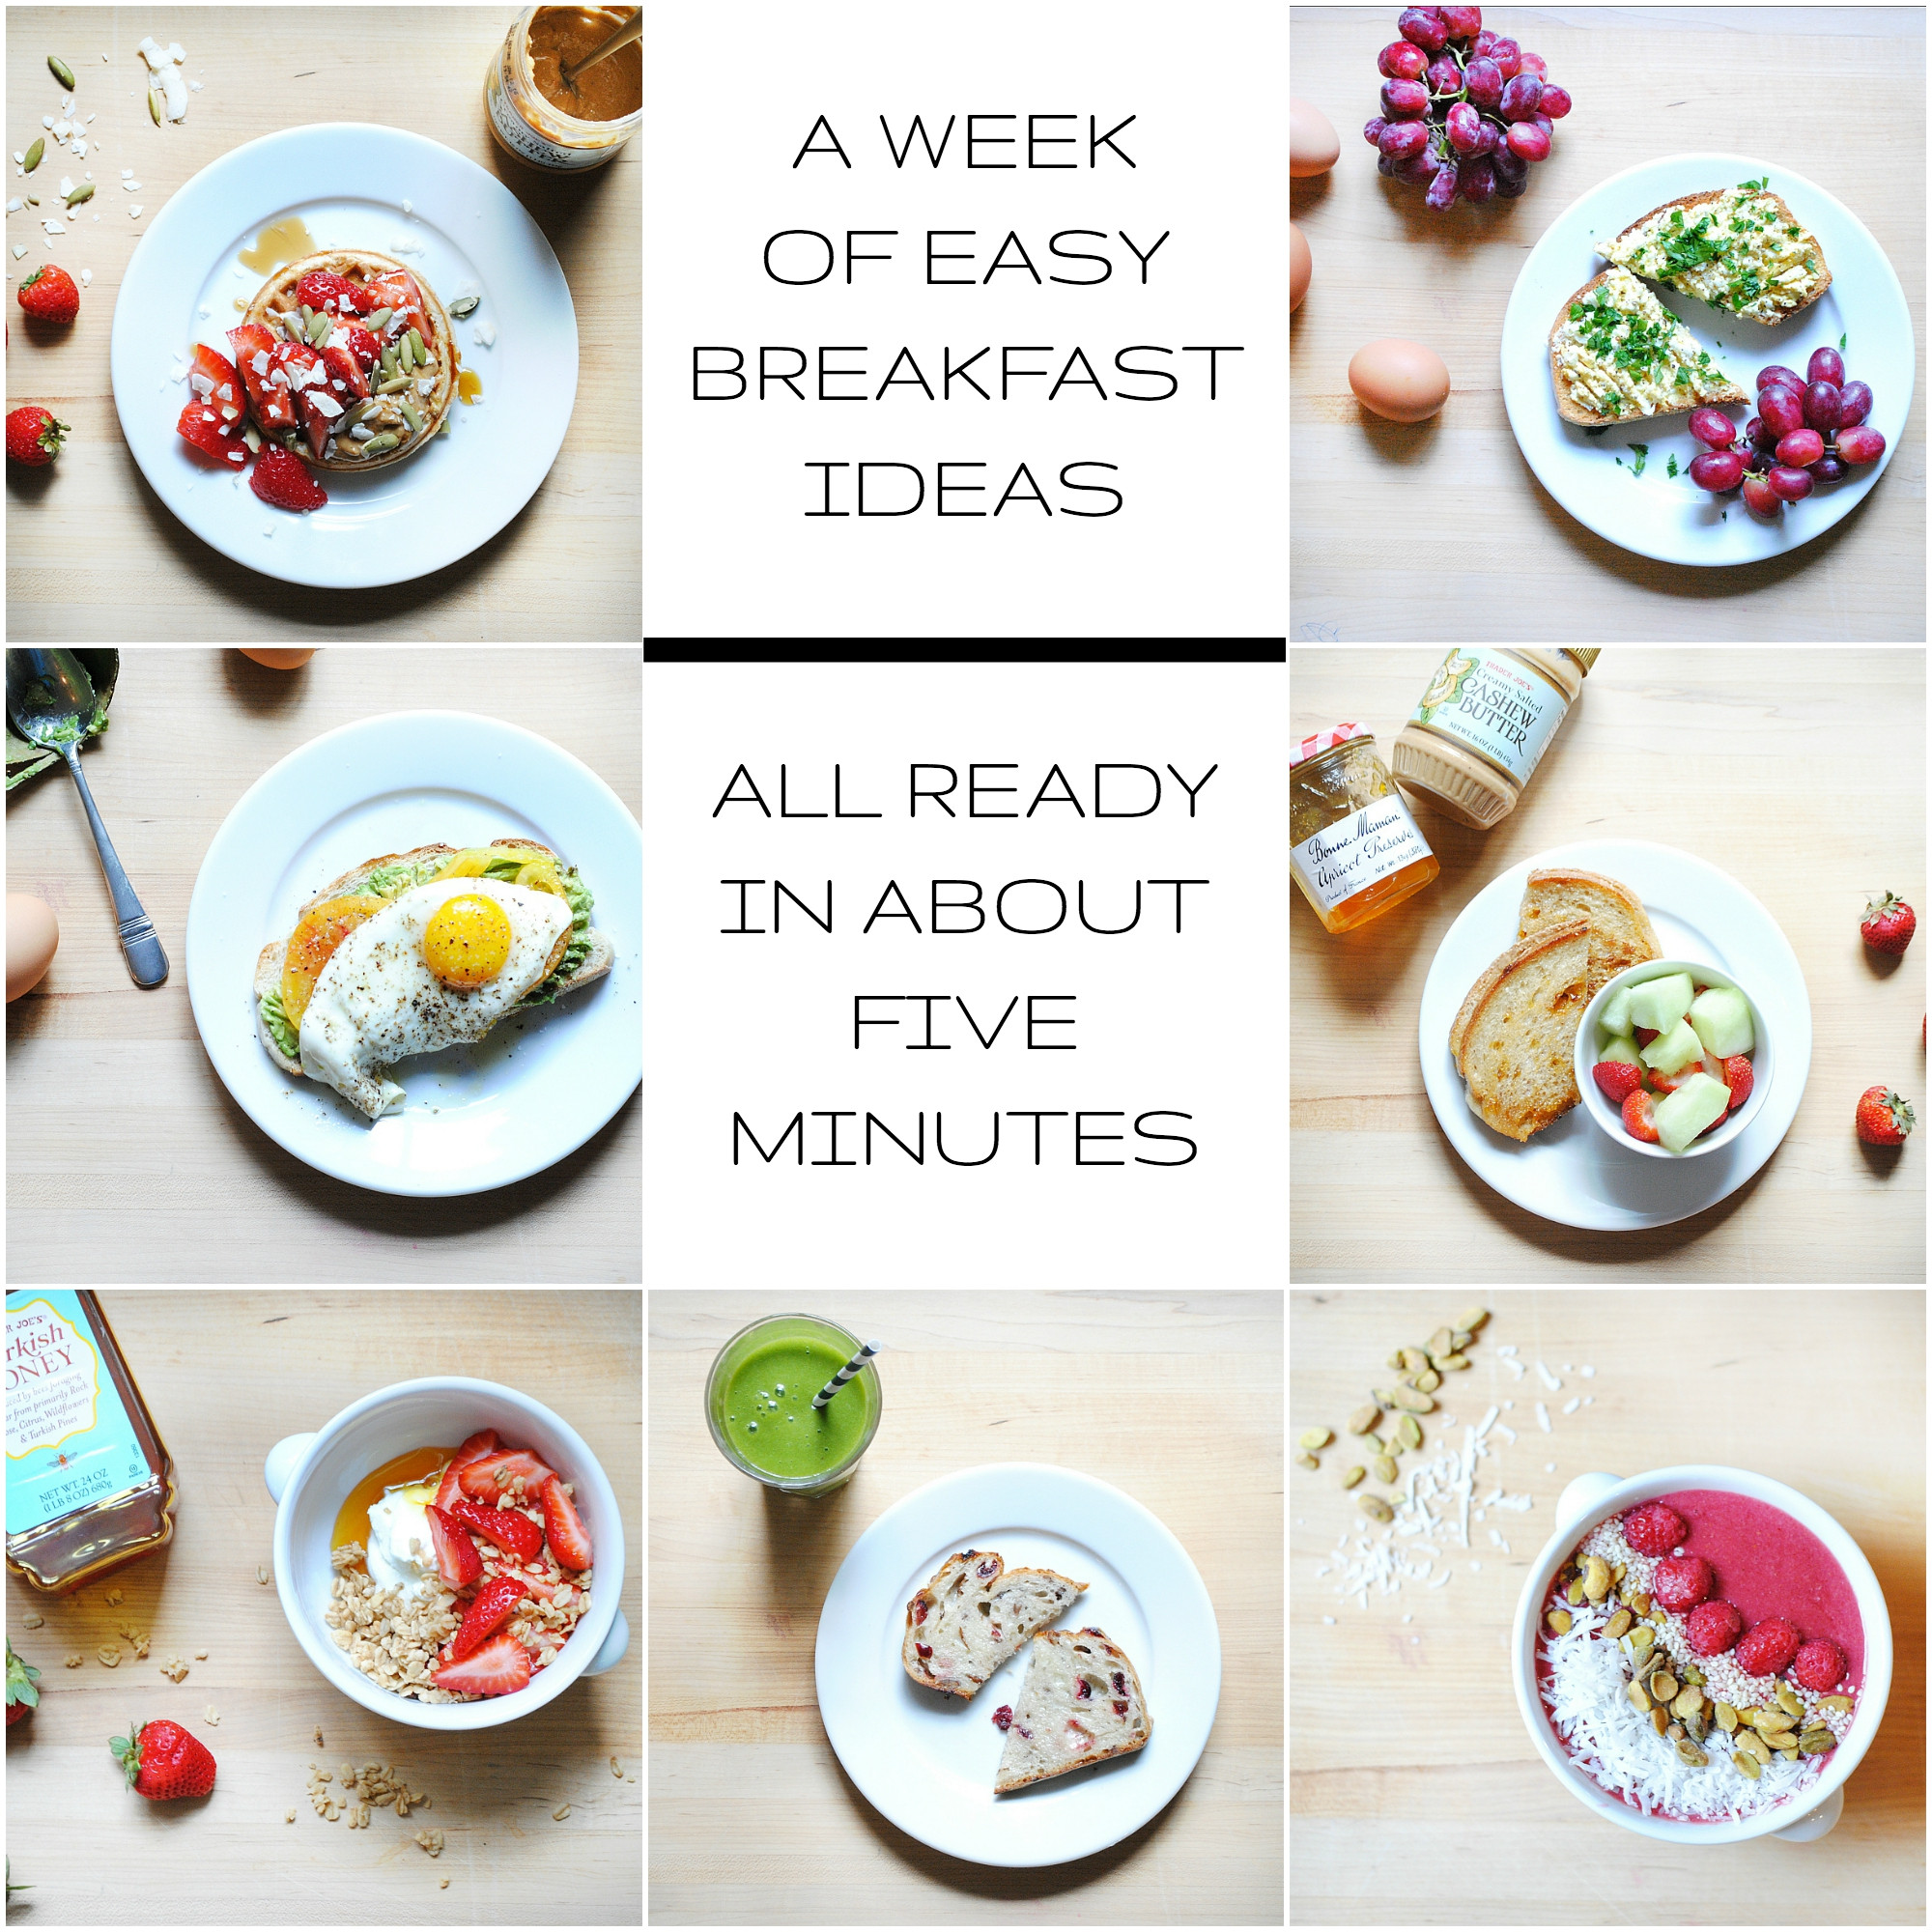 Healthy Easy Breakfast Ideas
 A Week of Healthy Easy Breakfast Ideas All Ready in